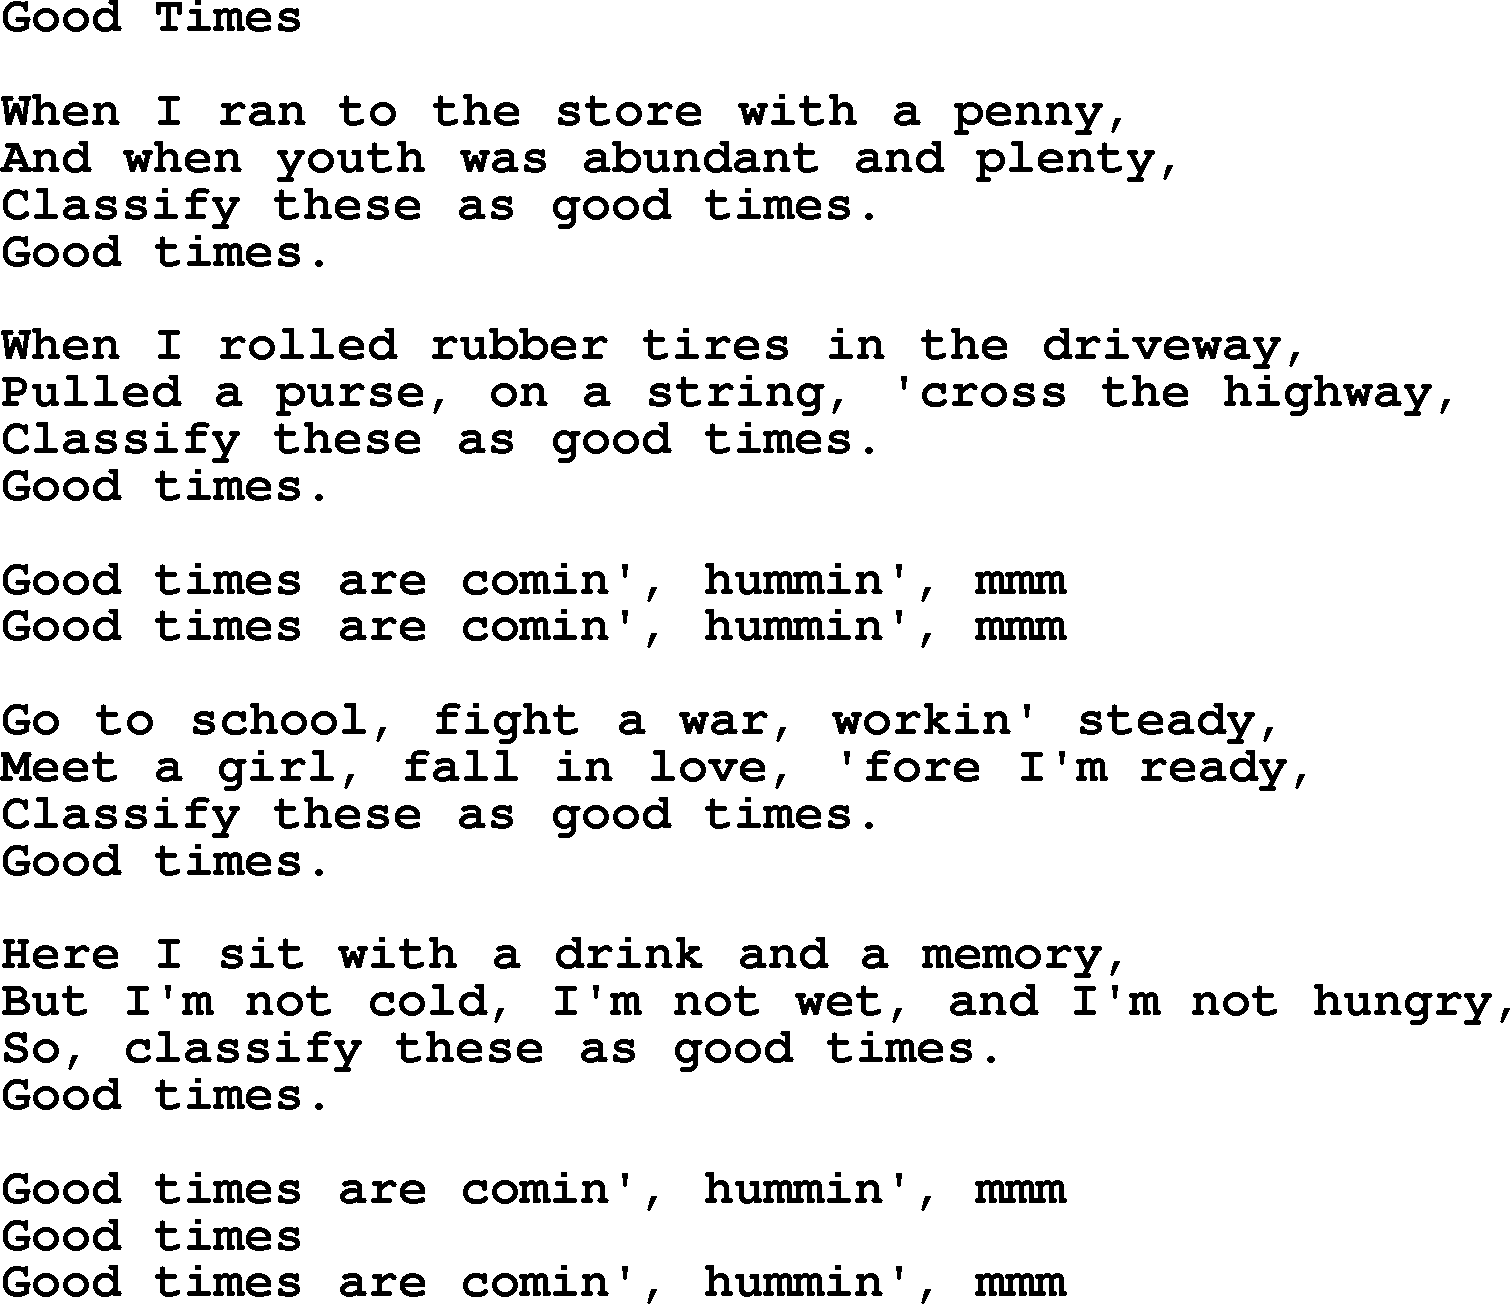 Willie Nelson song: Good Times lyrics